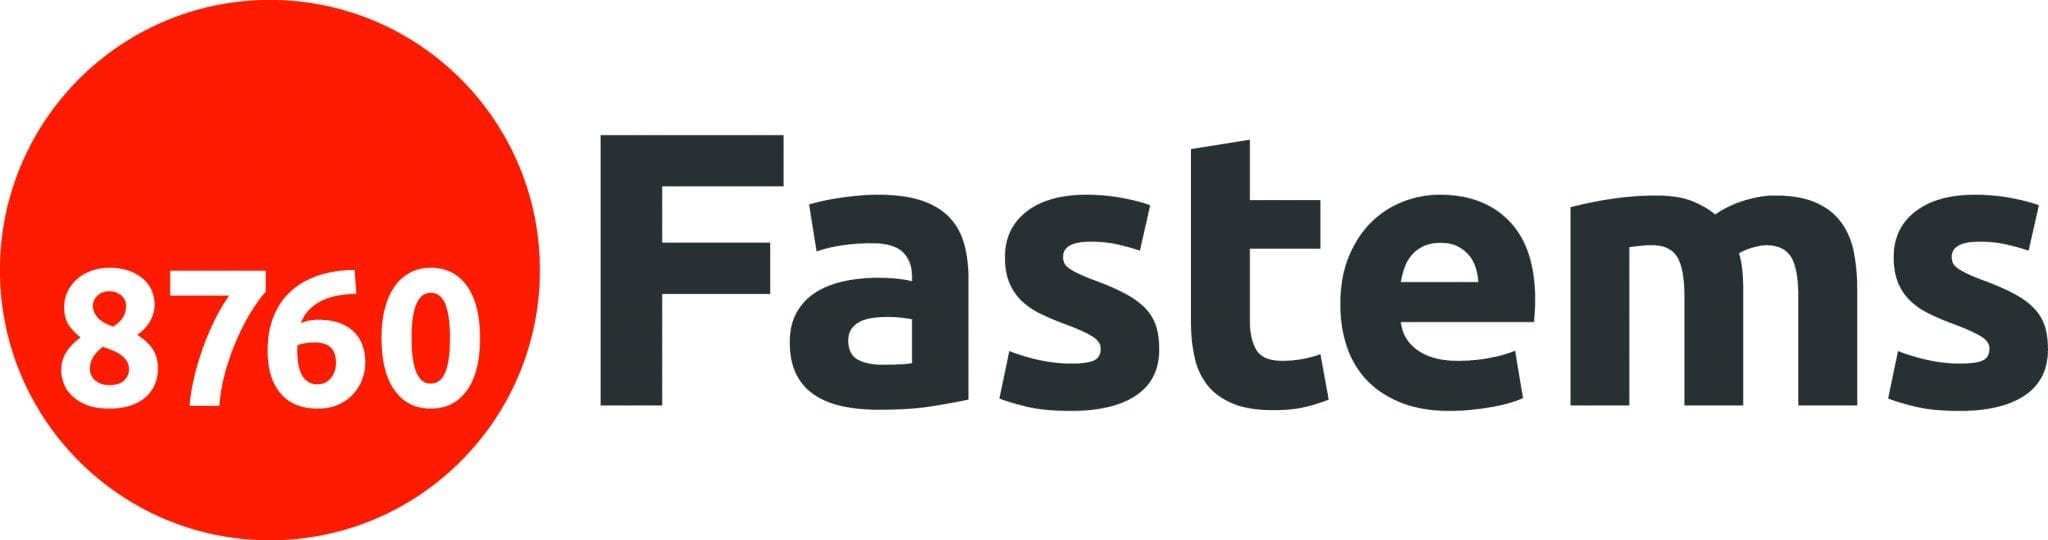 Fastems logo